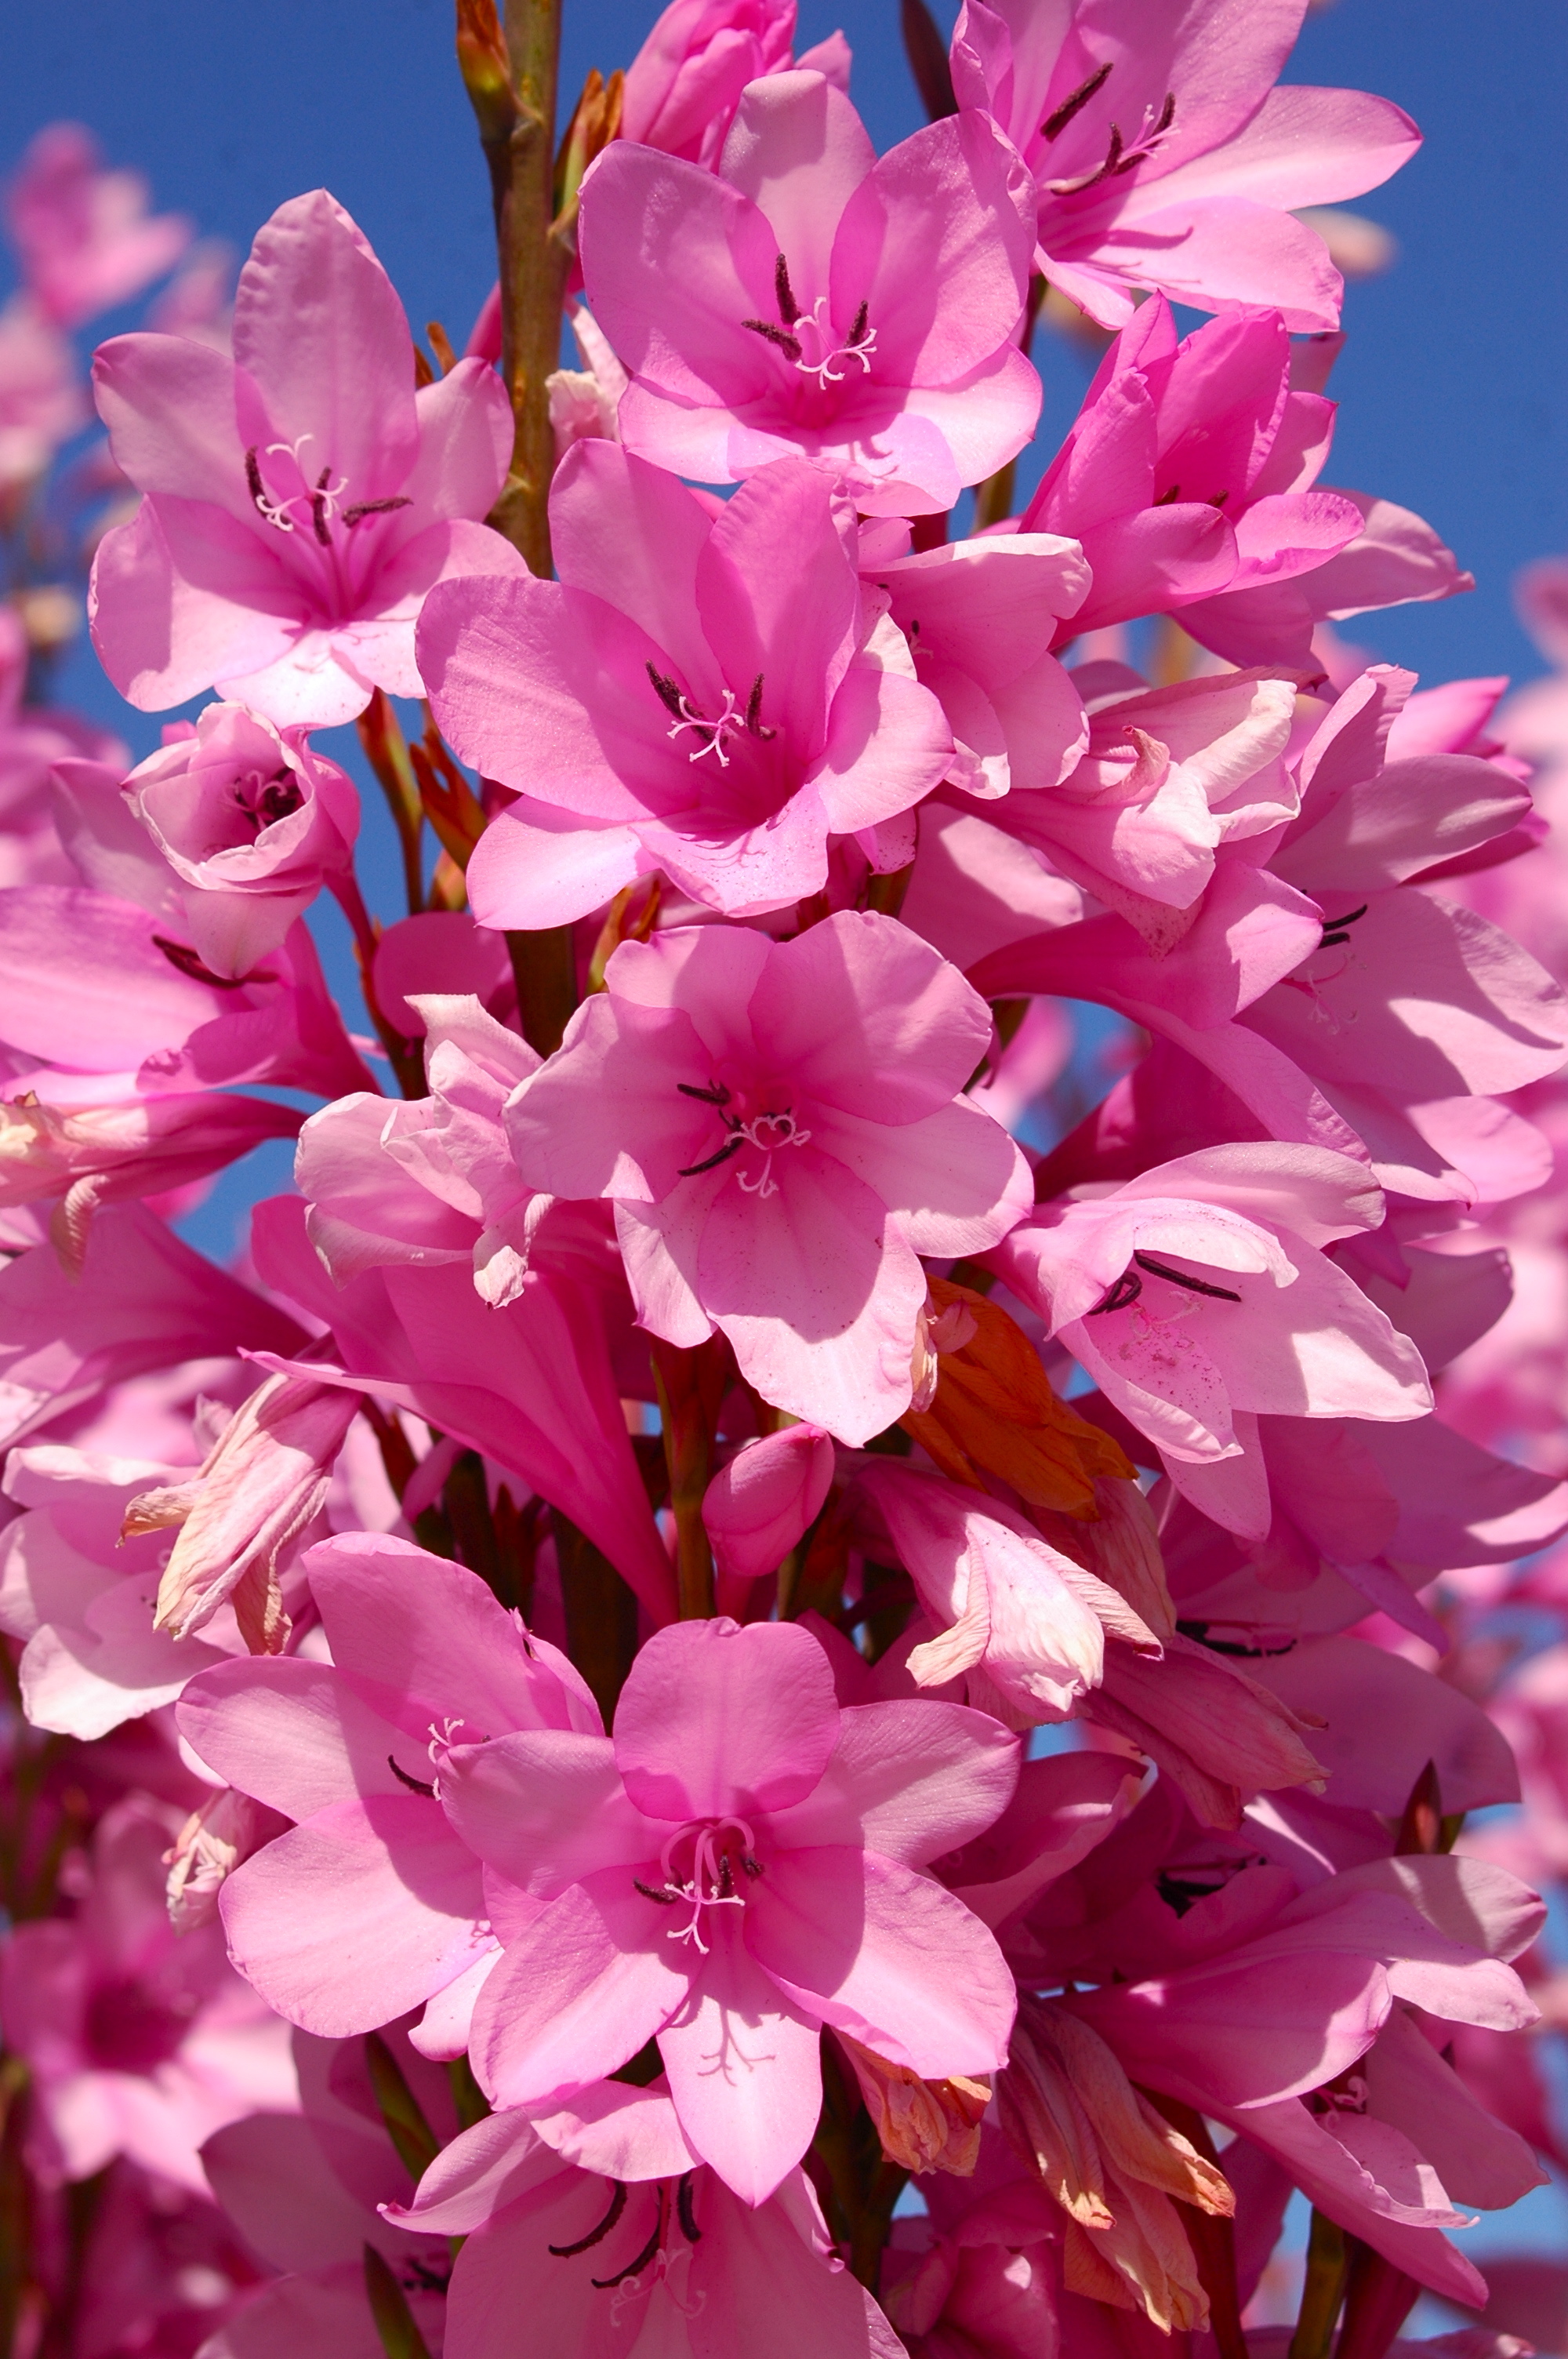 Free photo: Tropical Pink Flowers - Spring, Seasonal, Pretty - Free ...